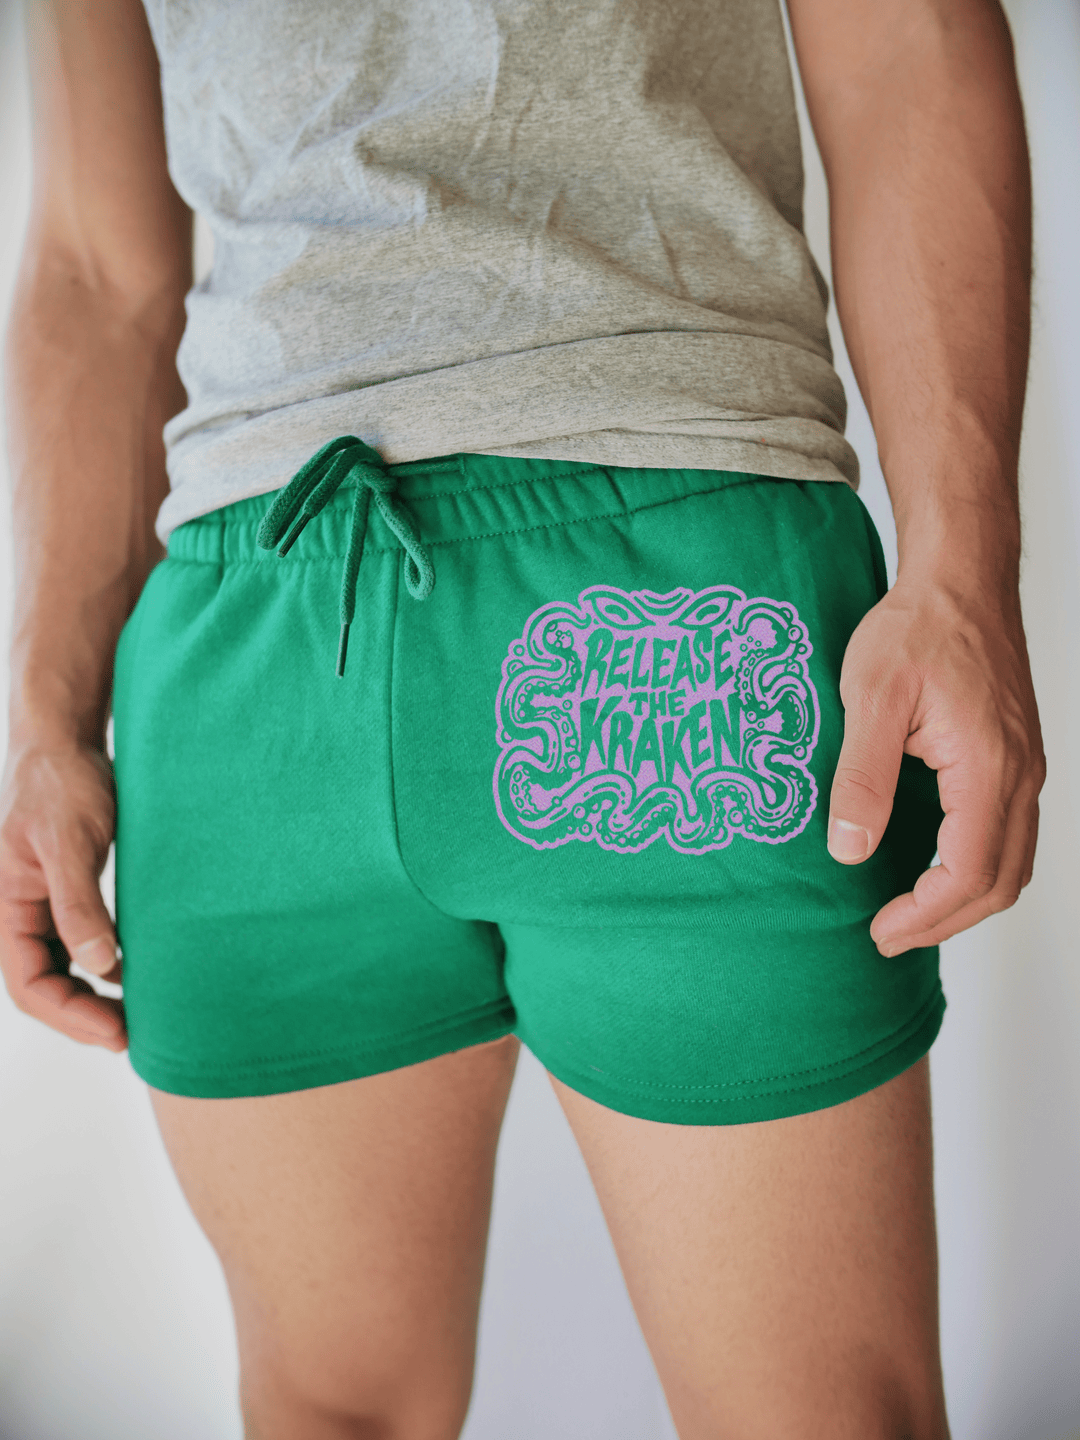 PixelThat Punderwear Shorts Kelly Green / S / Front Release The Kraken Men's Gym Shorts